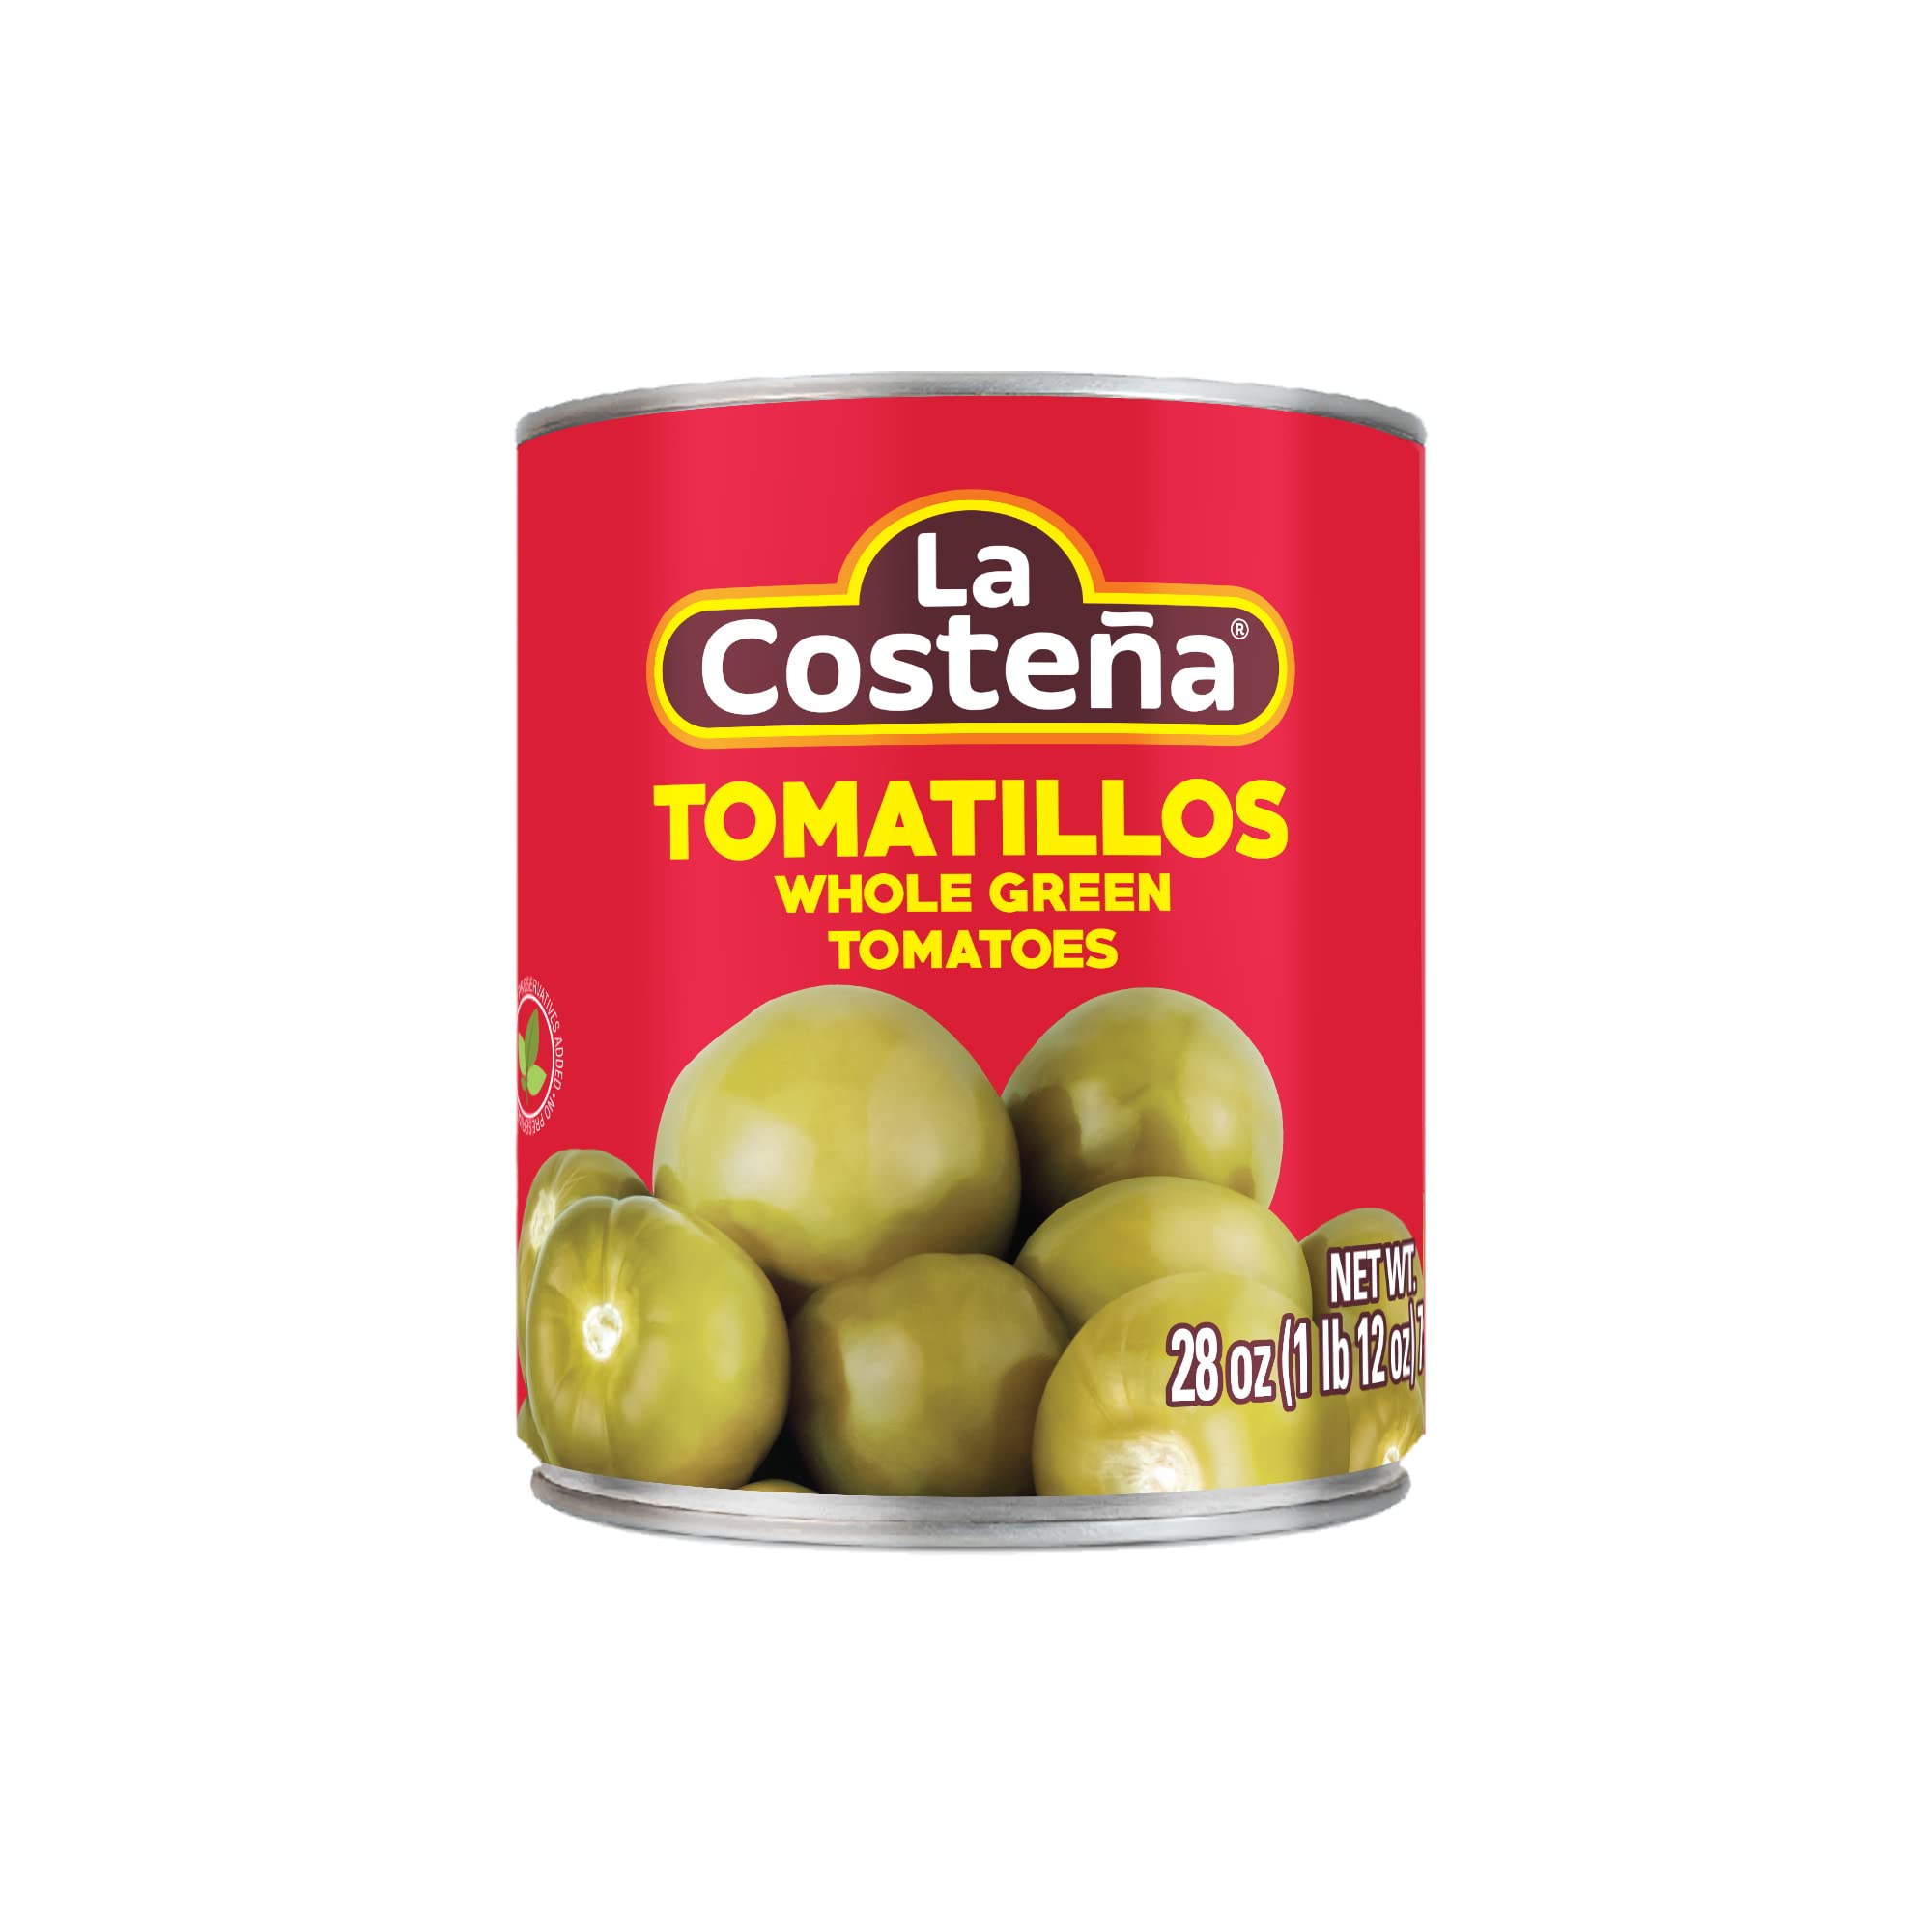 Exclusif La Costeña entier Vert Tomatilles 794g D9mQCrcdD frais